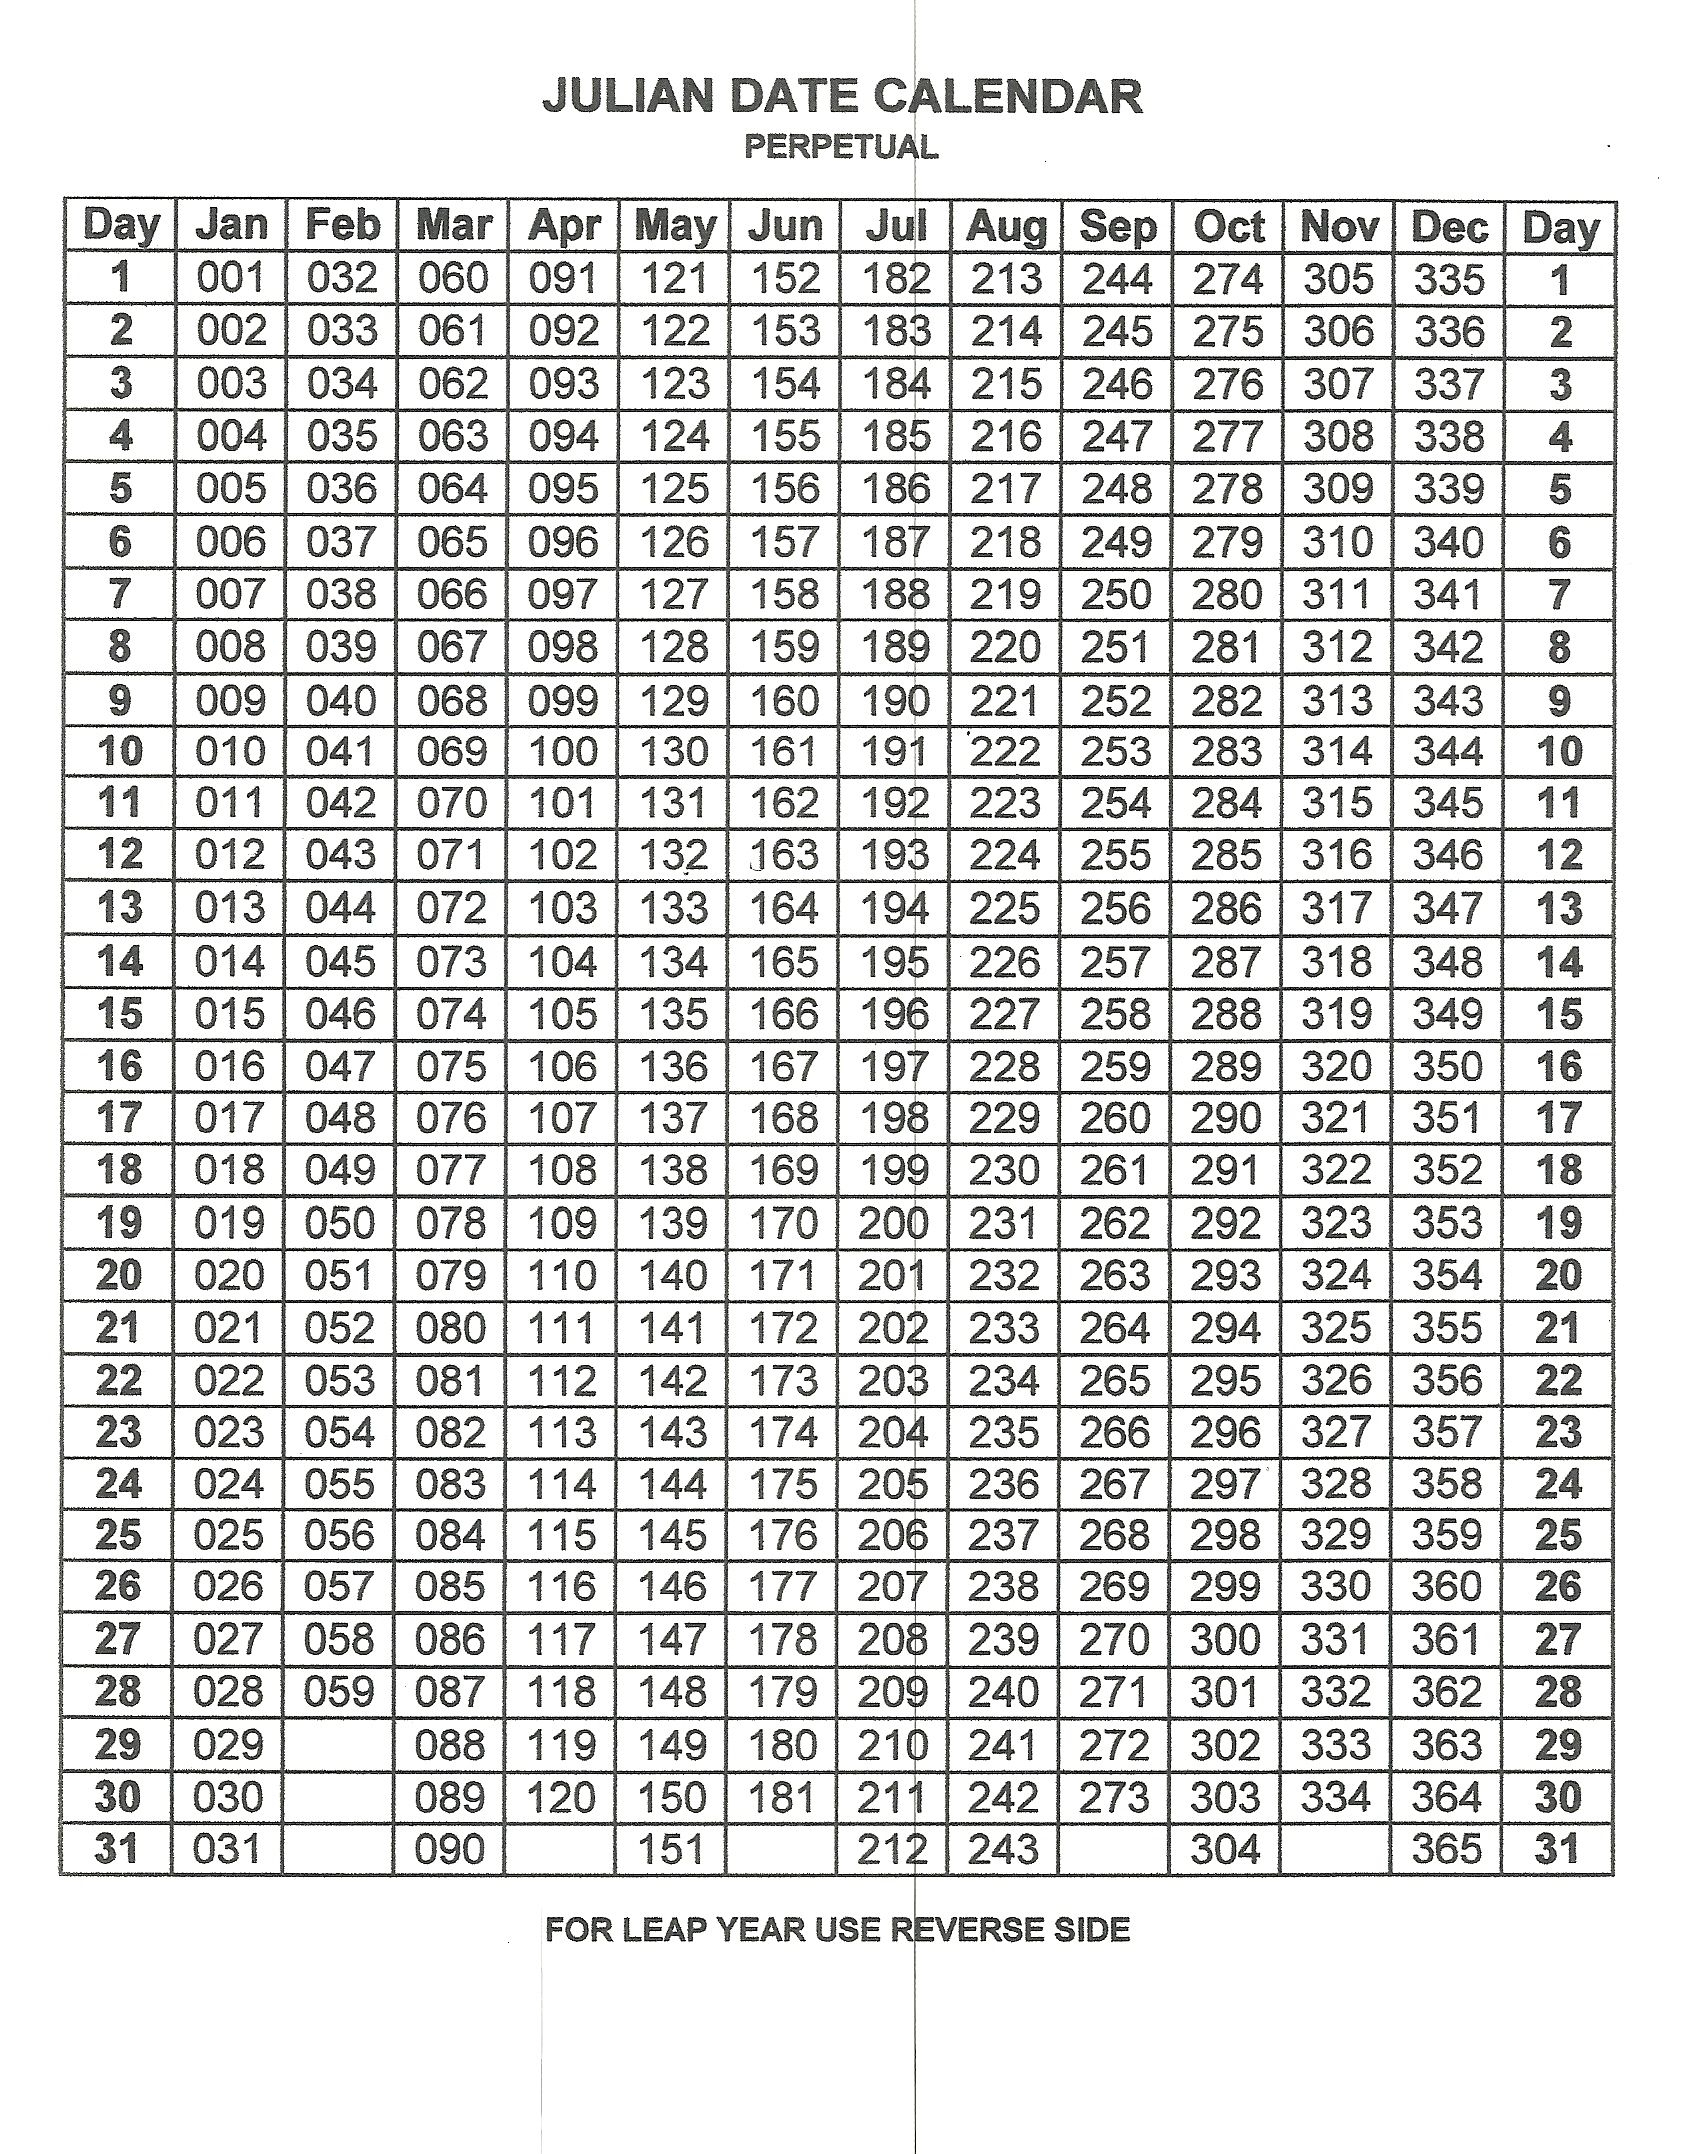 Perpetual Julian Date Calendar | Julian Dates, Calendar pertaining to Julian Date Calendar 2020